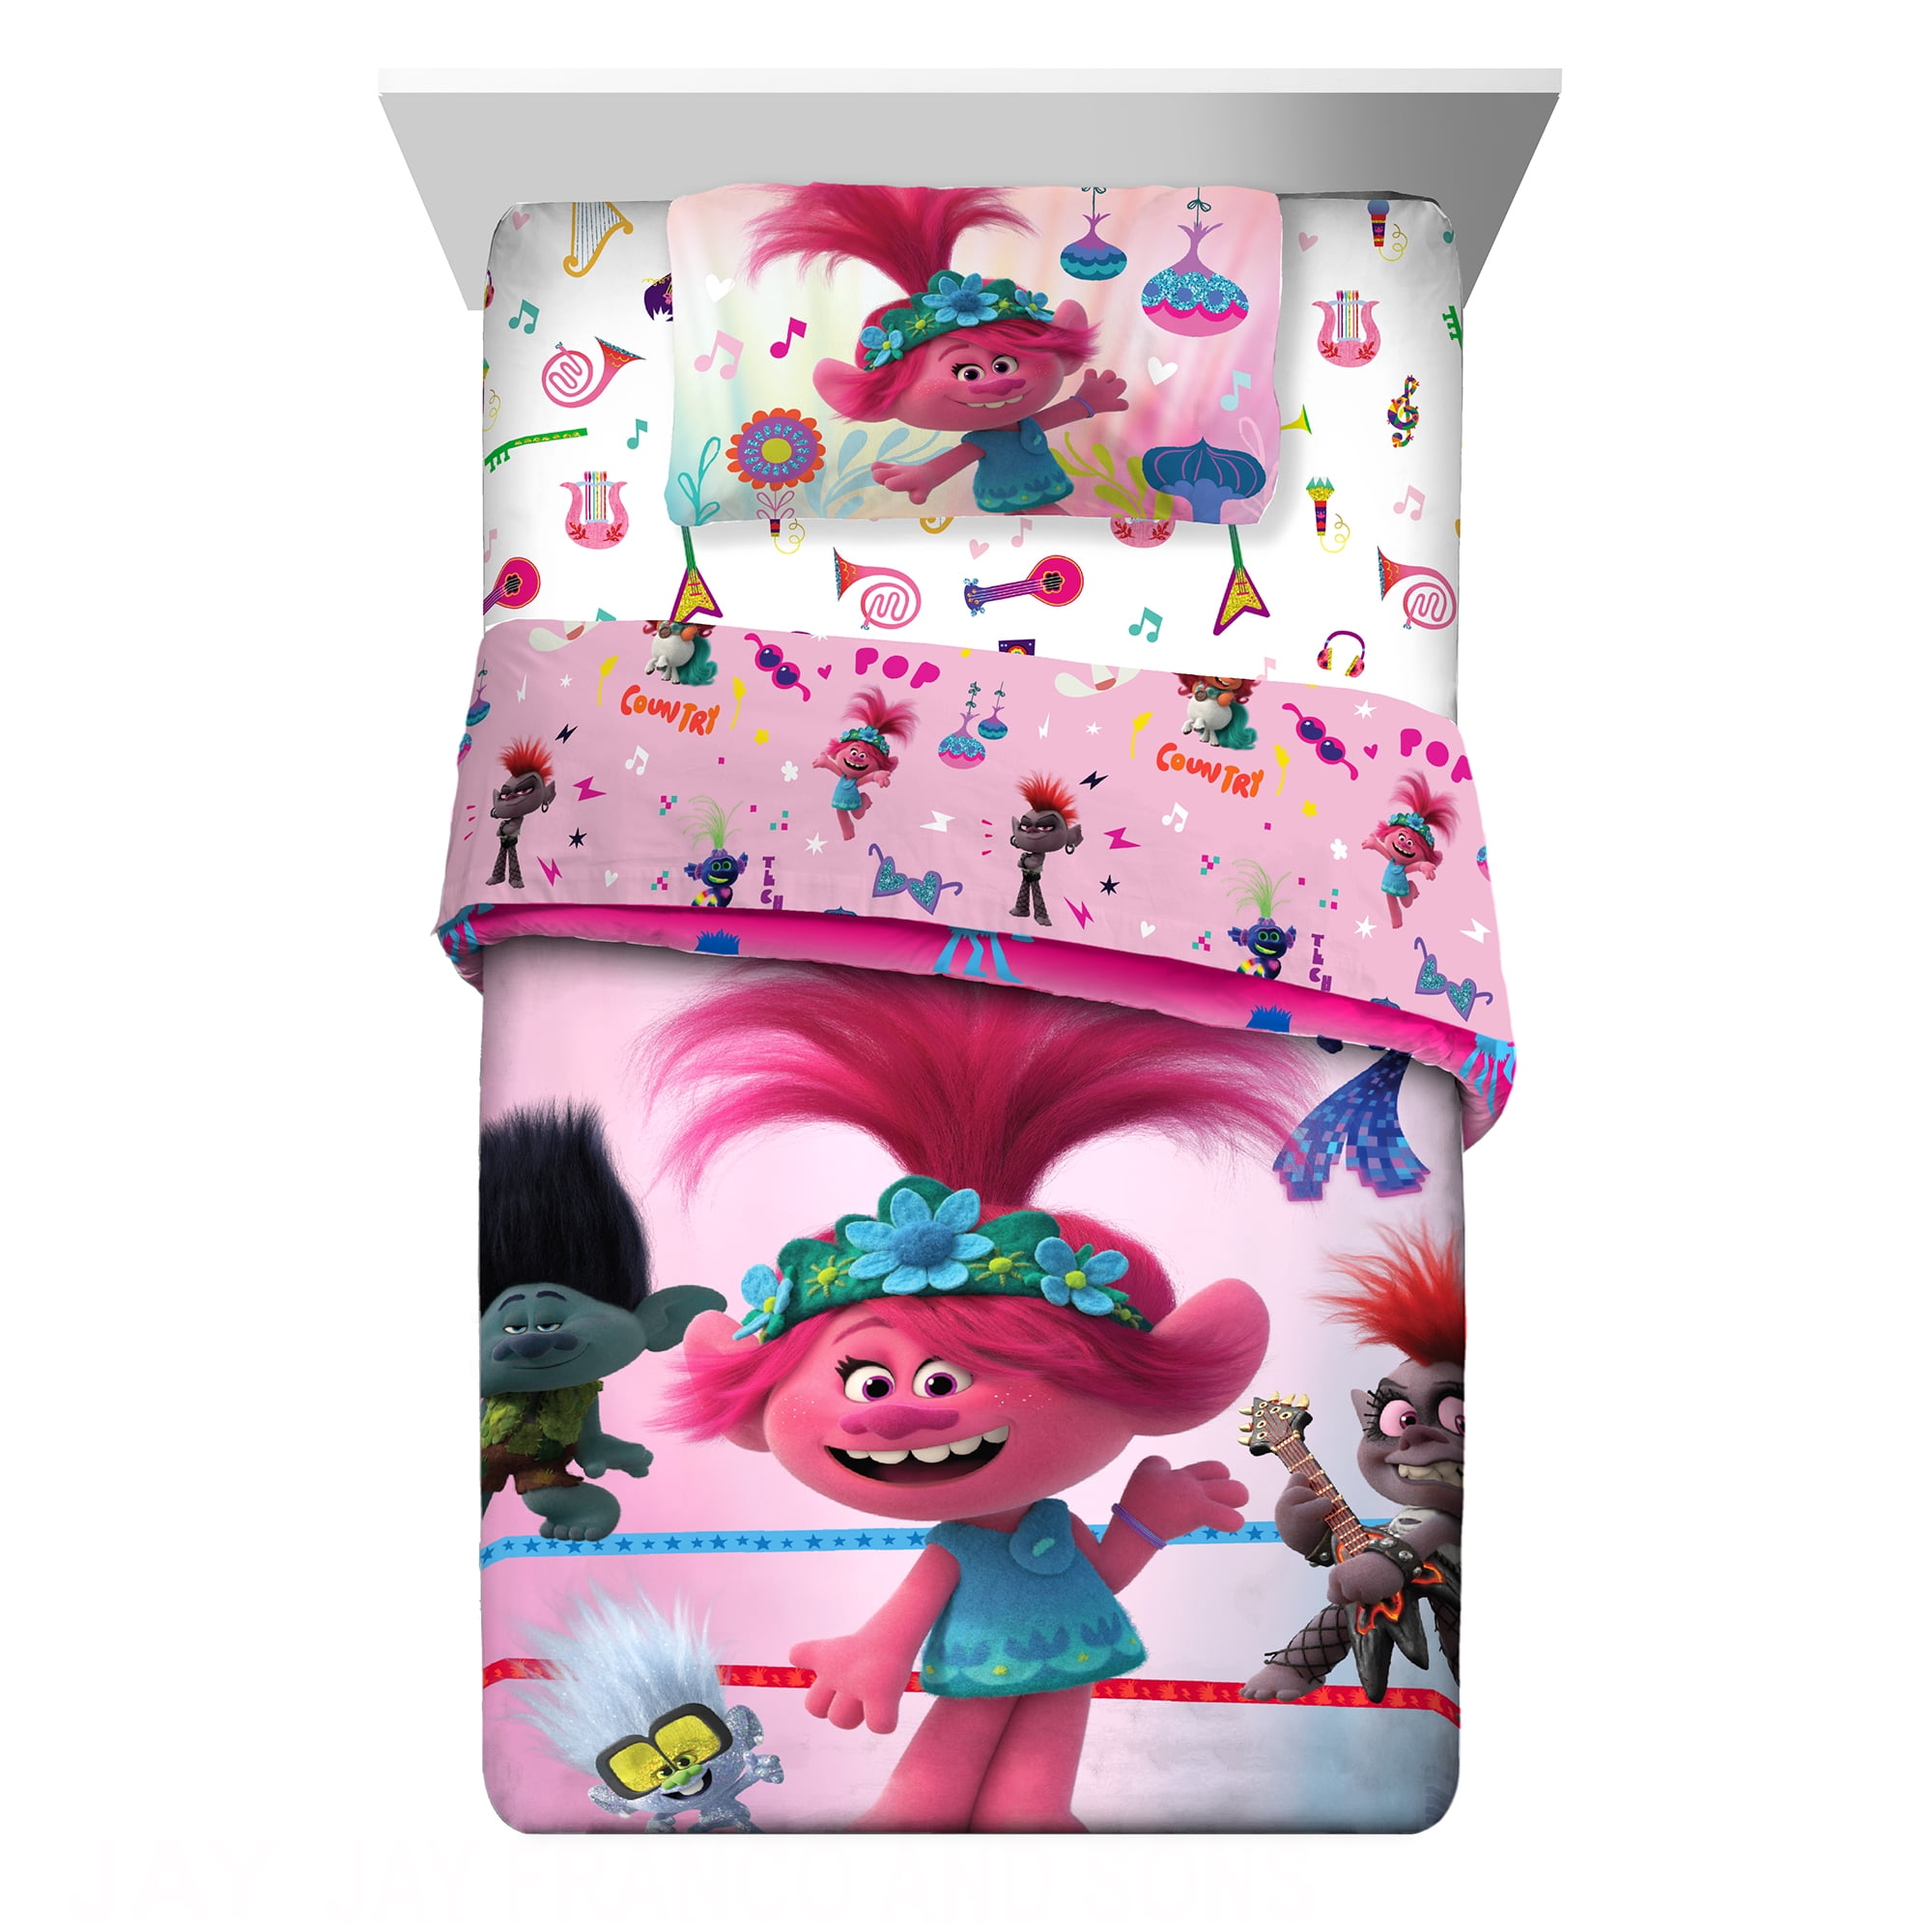 Trolls Kids Twin Bed in a Bag, Comforter and Pink, DreamWorks - Walmart.com